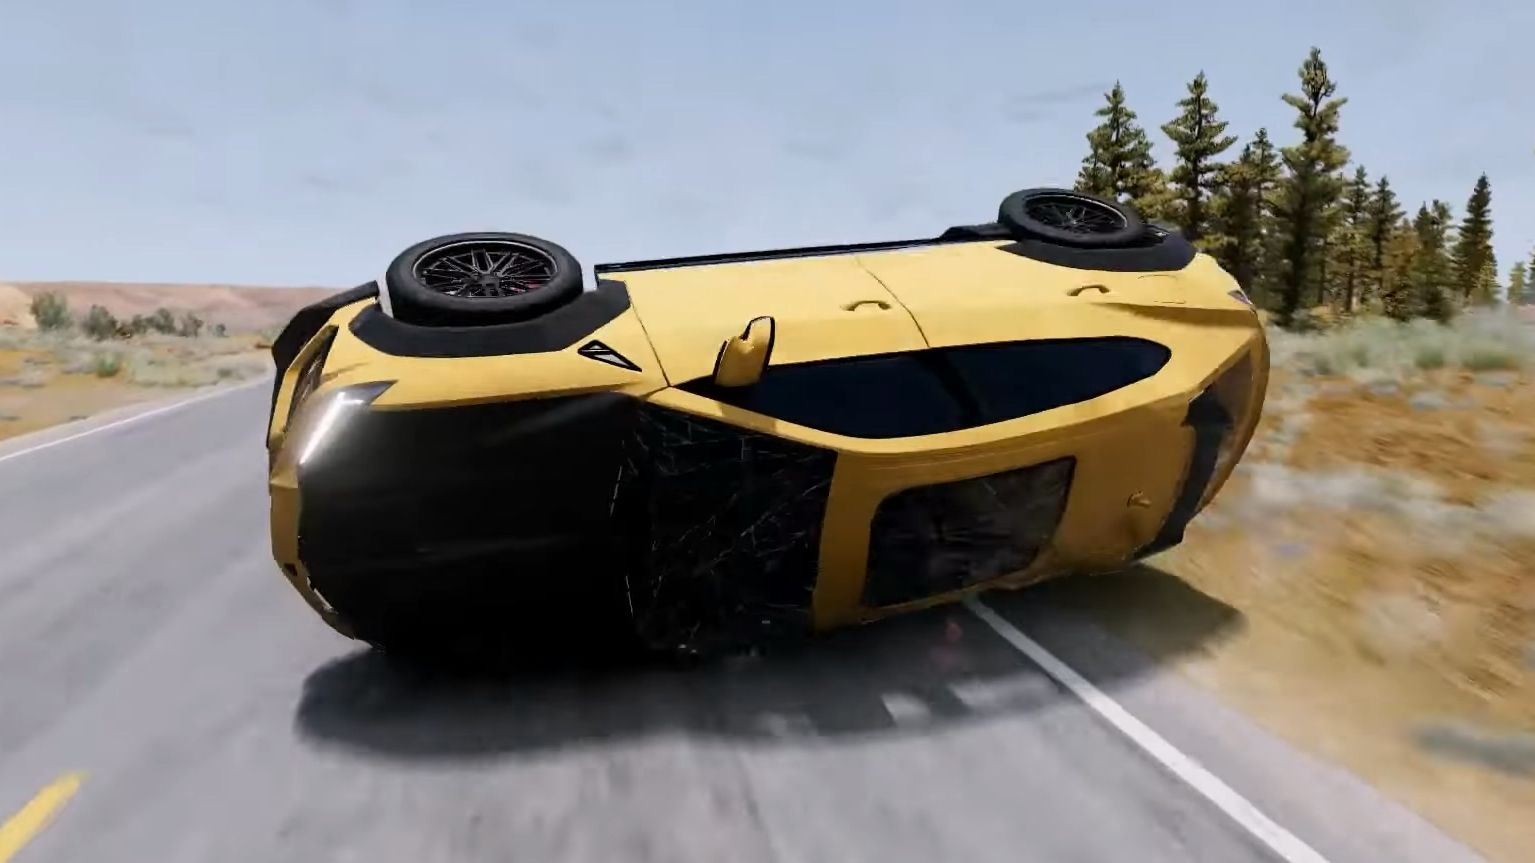 BeamNG模拟汽车翻车坠落车祸碰撞